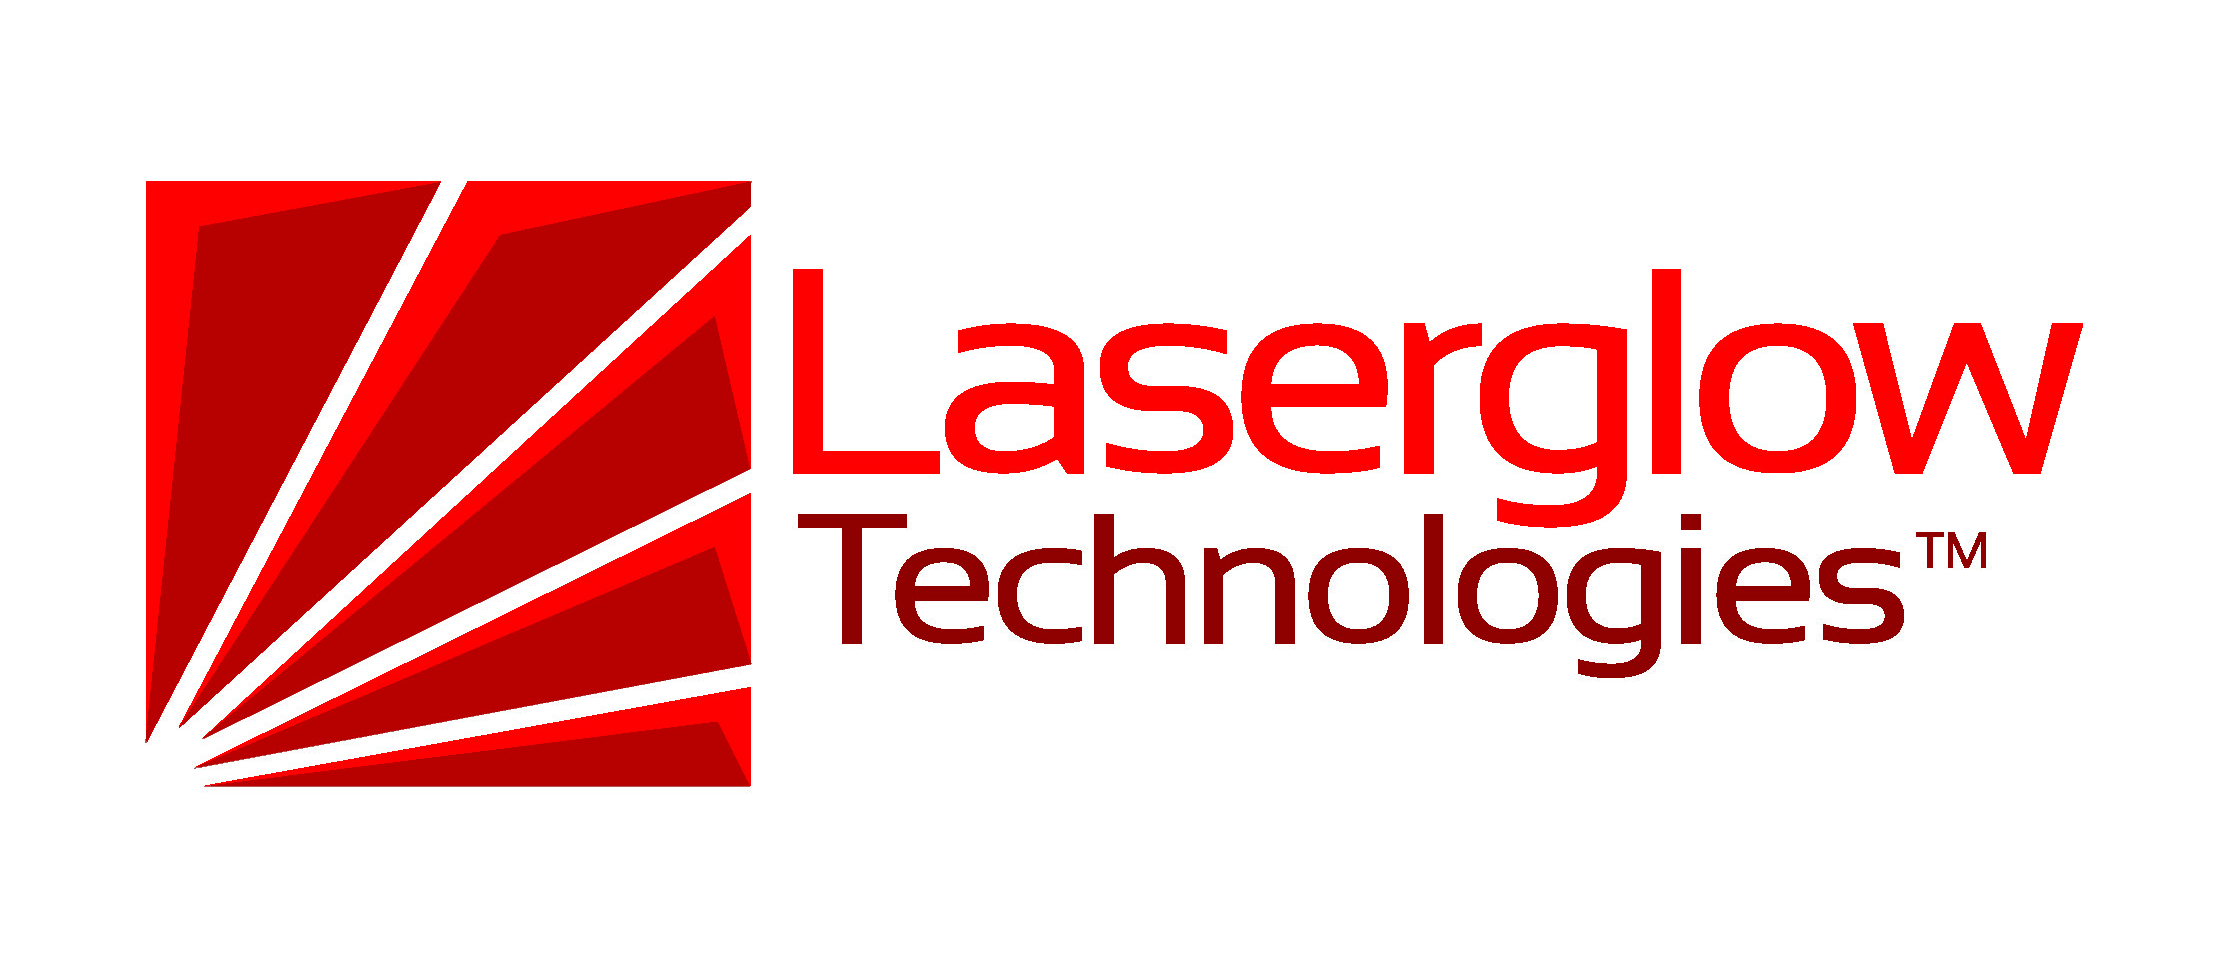 Laserglow technologies